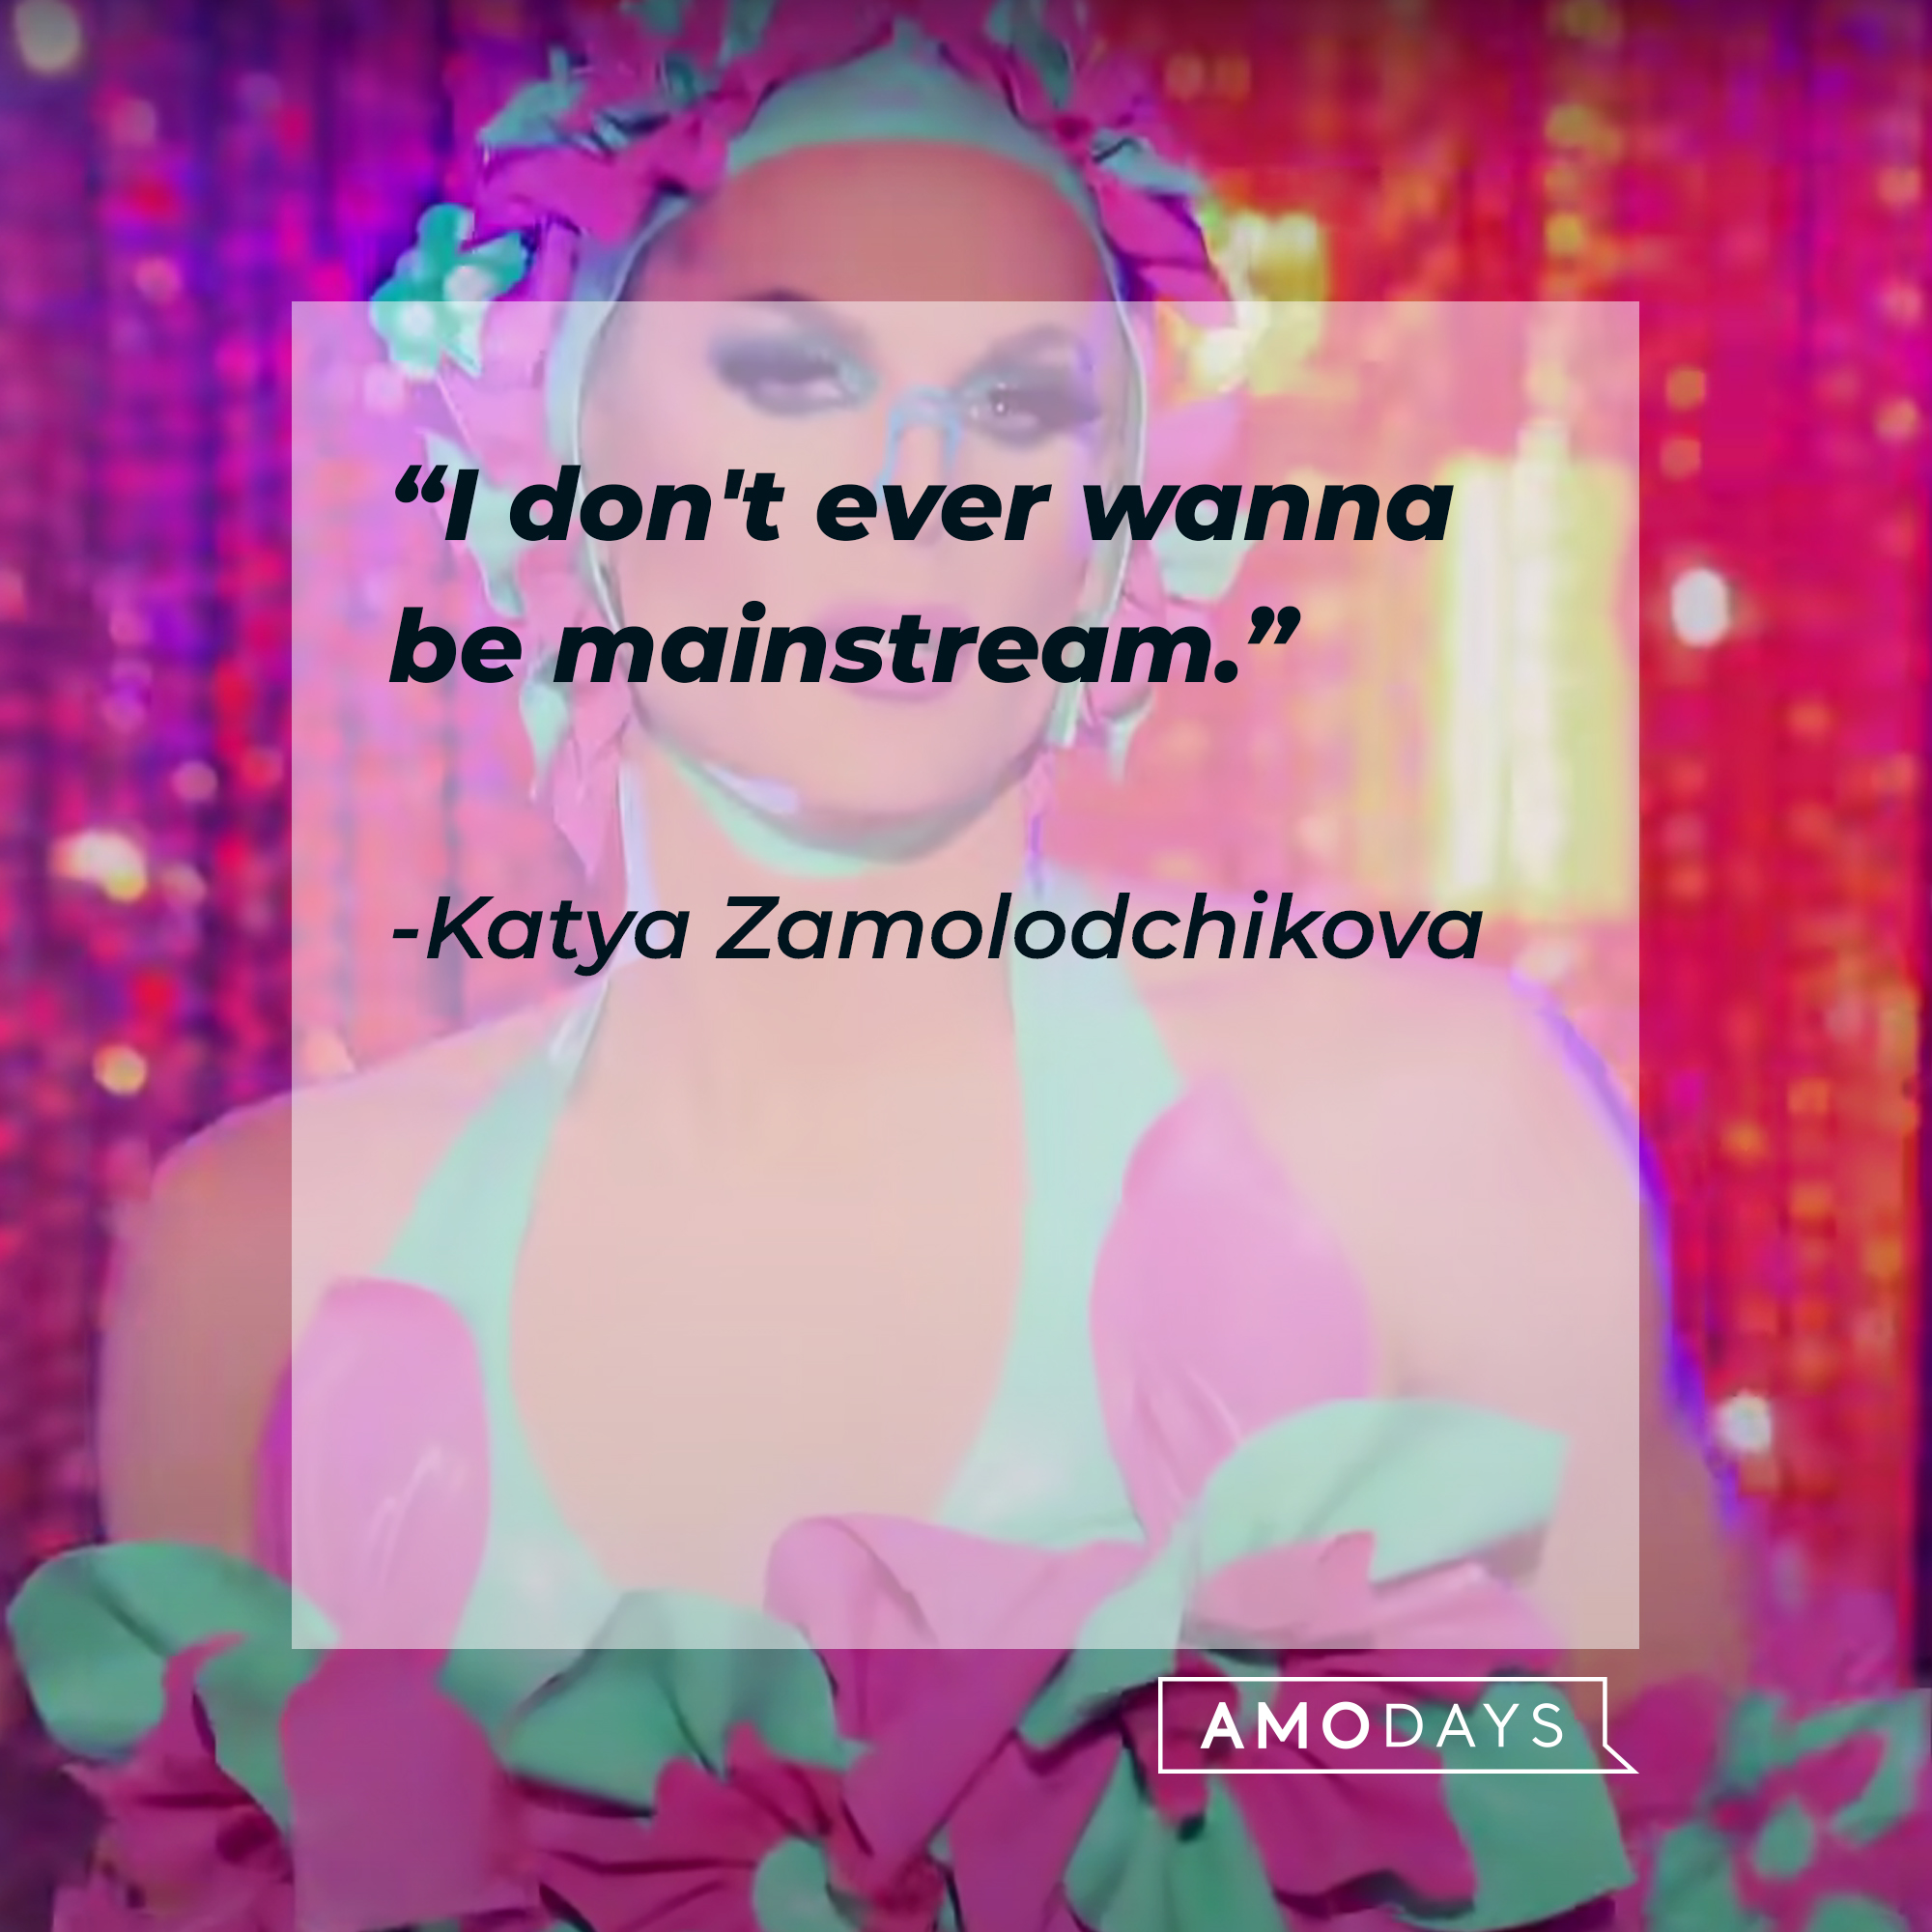 Katya Zamolodchikova, with her quote: “I don't ever wanna be mainstream.” | Source: youtube.com/rupaulsdragrace